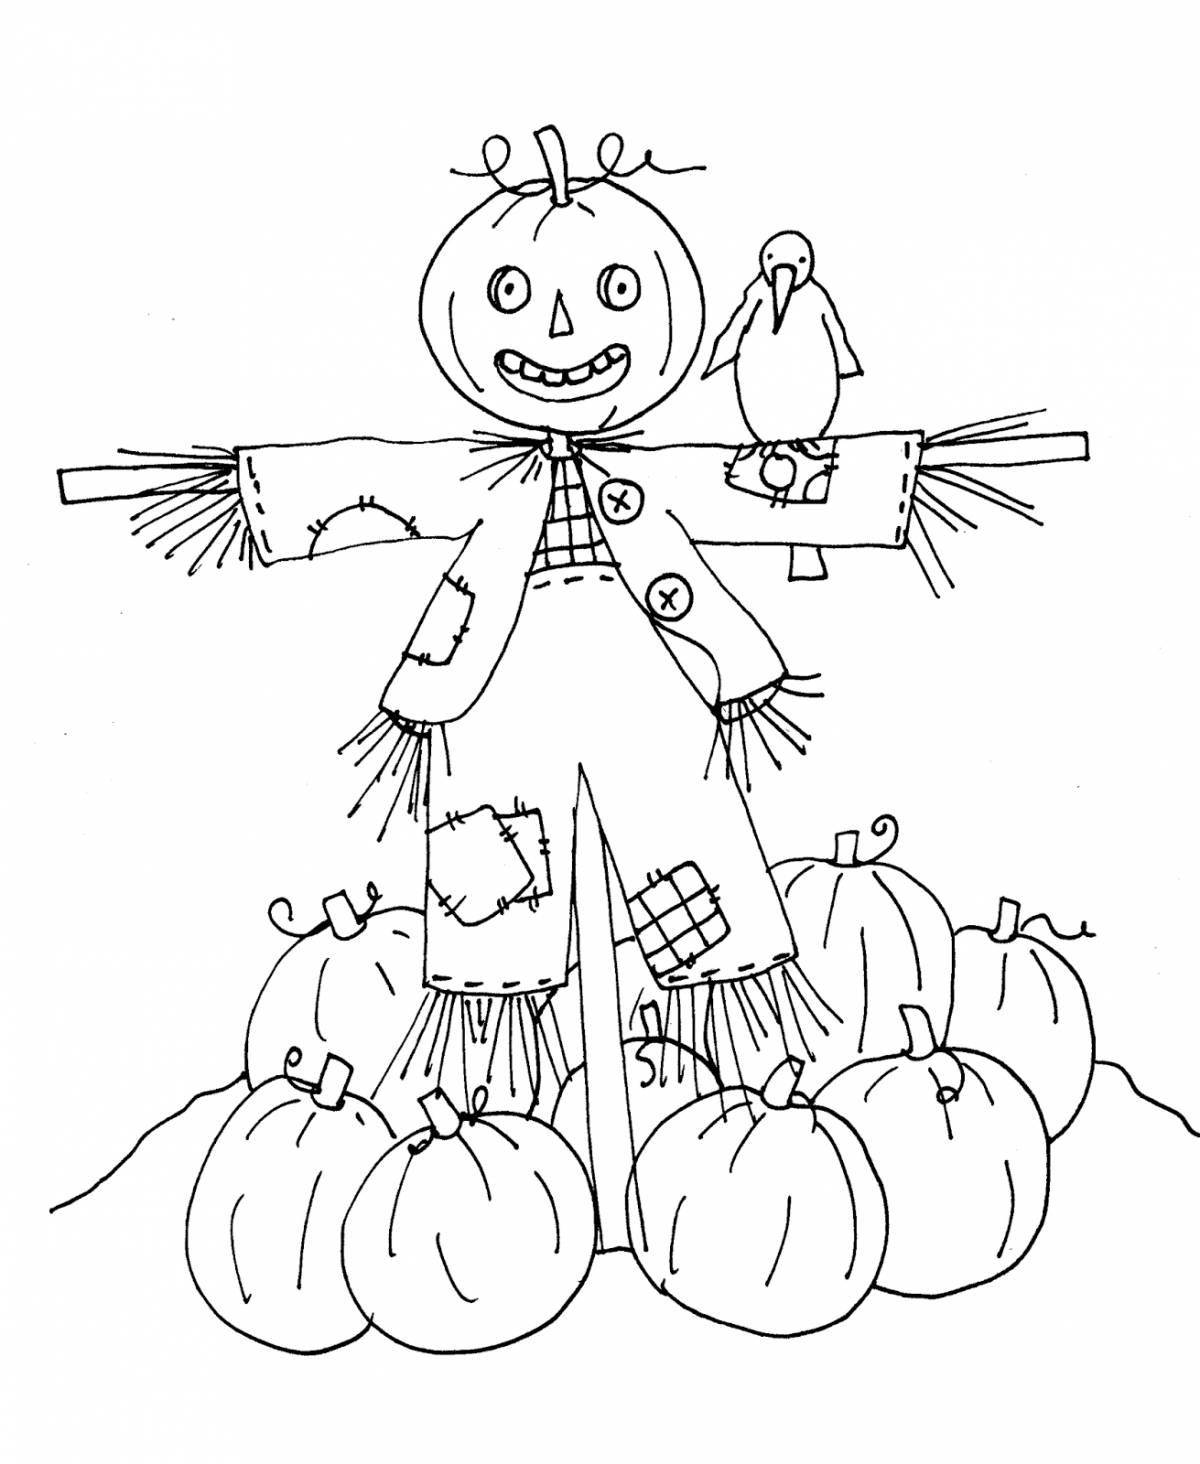 Children's scarecrow coloring book